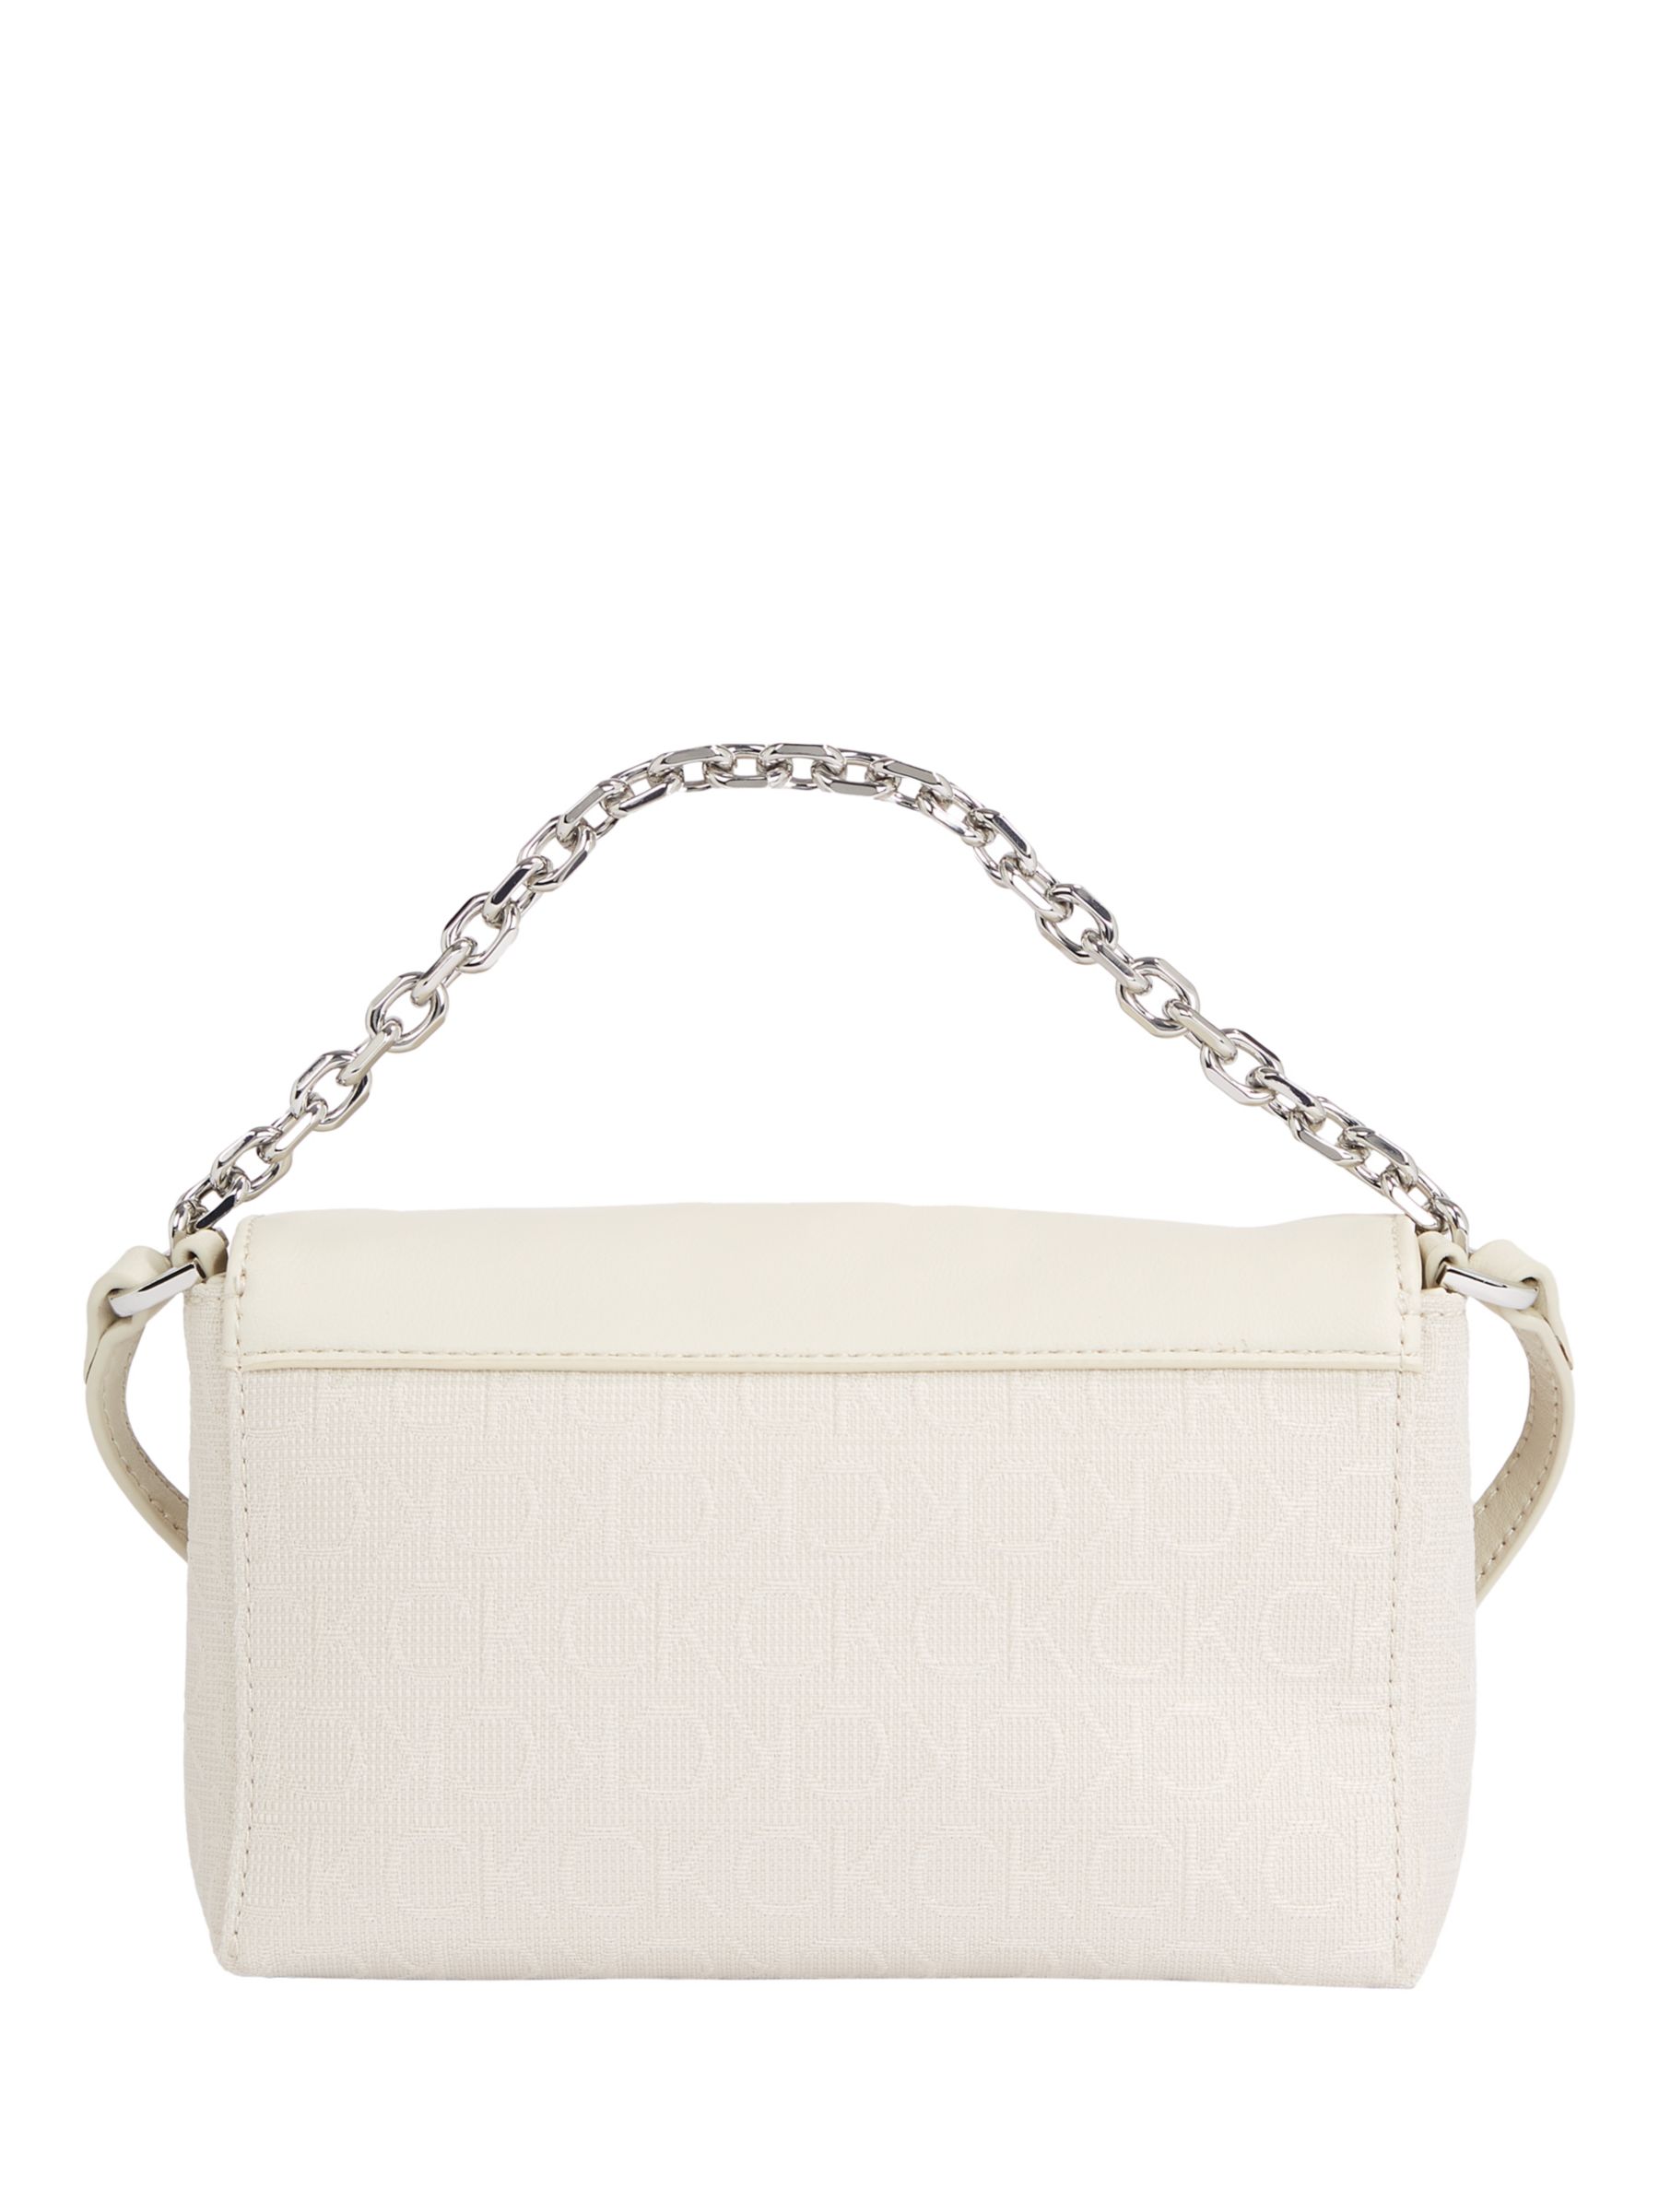 Calvin Klein Mini Jacquard Weave Crossbody Bag, Ecru, One Size